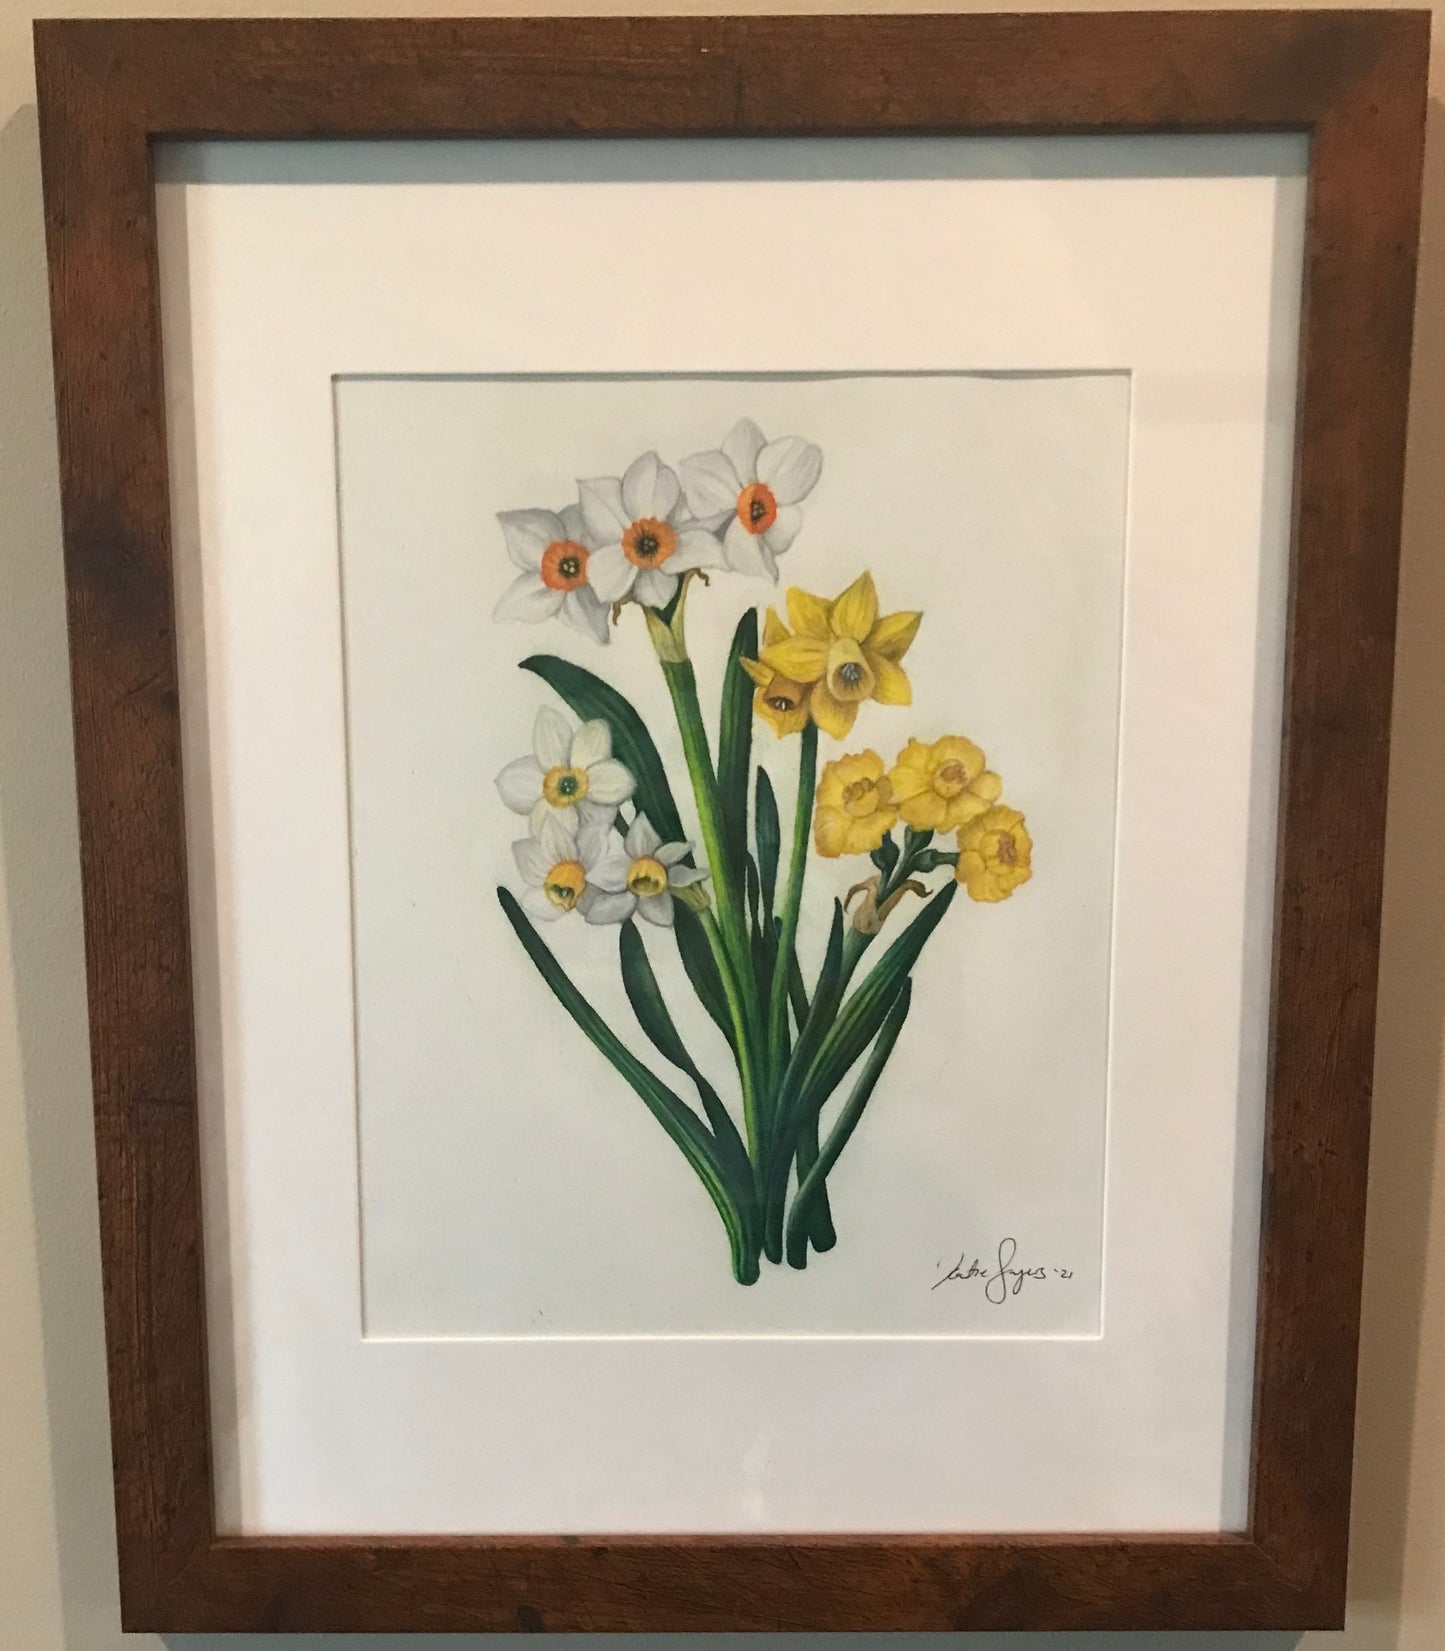 March Birth Flowers Botanical Illustration, Daffodils and Jonquils